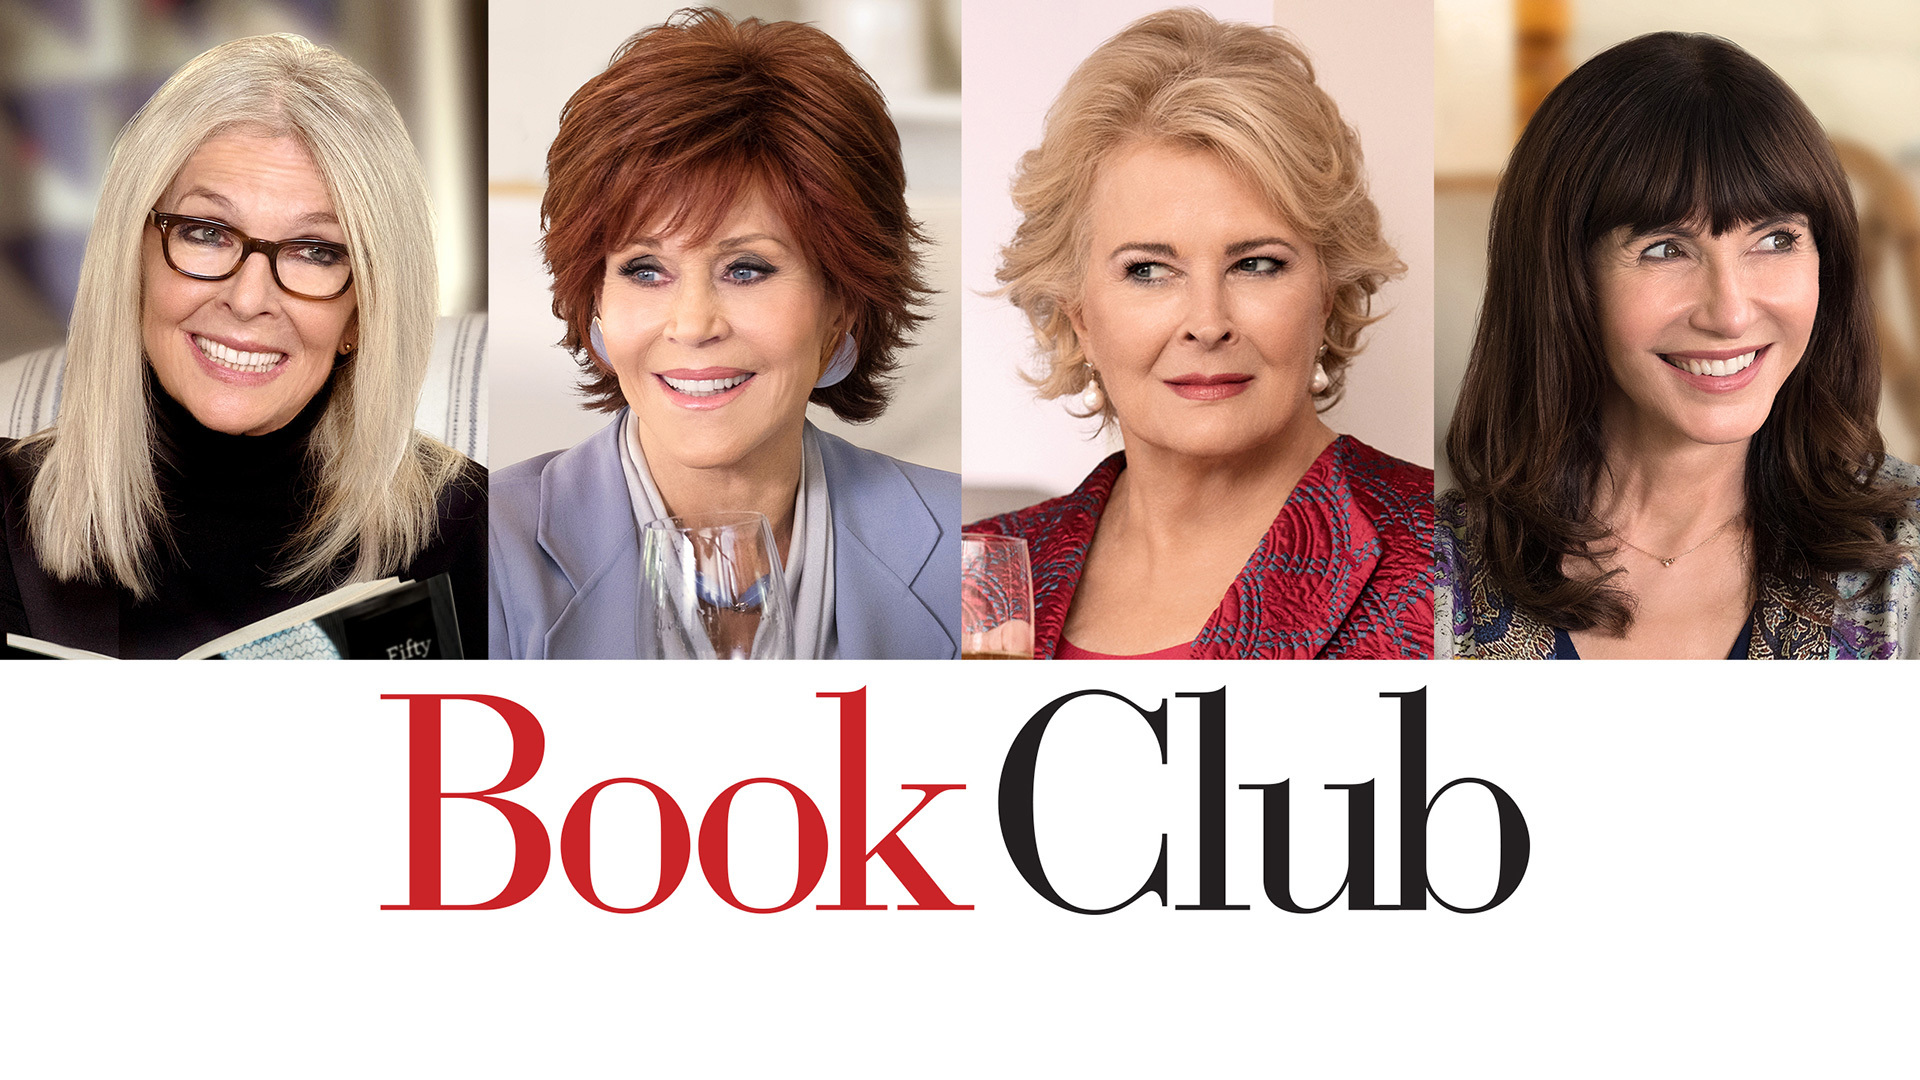 Book Club - Watch Movie Trailer on Paramount Plus